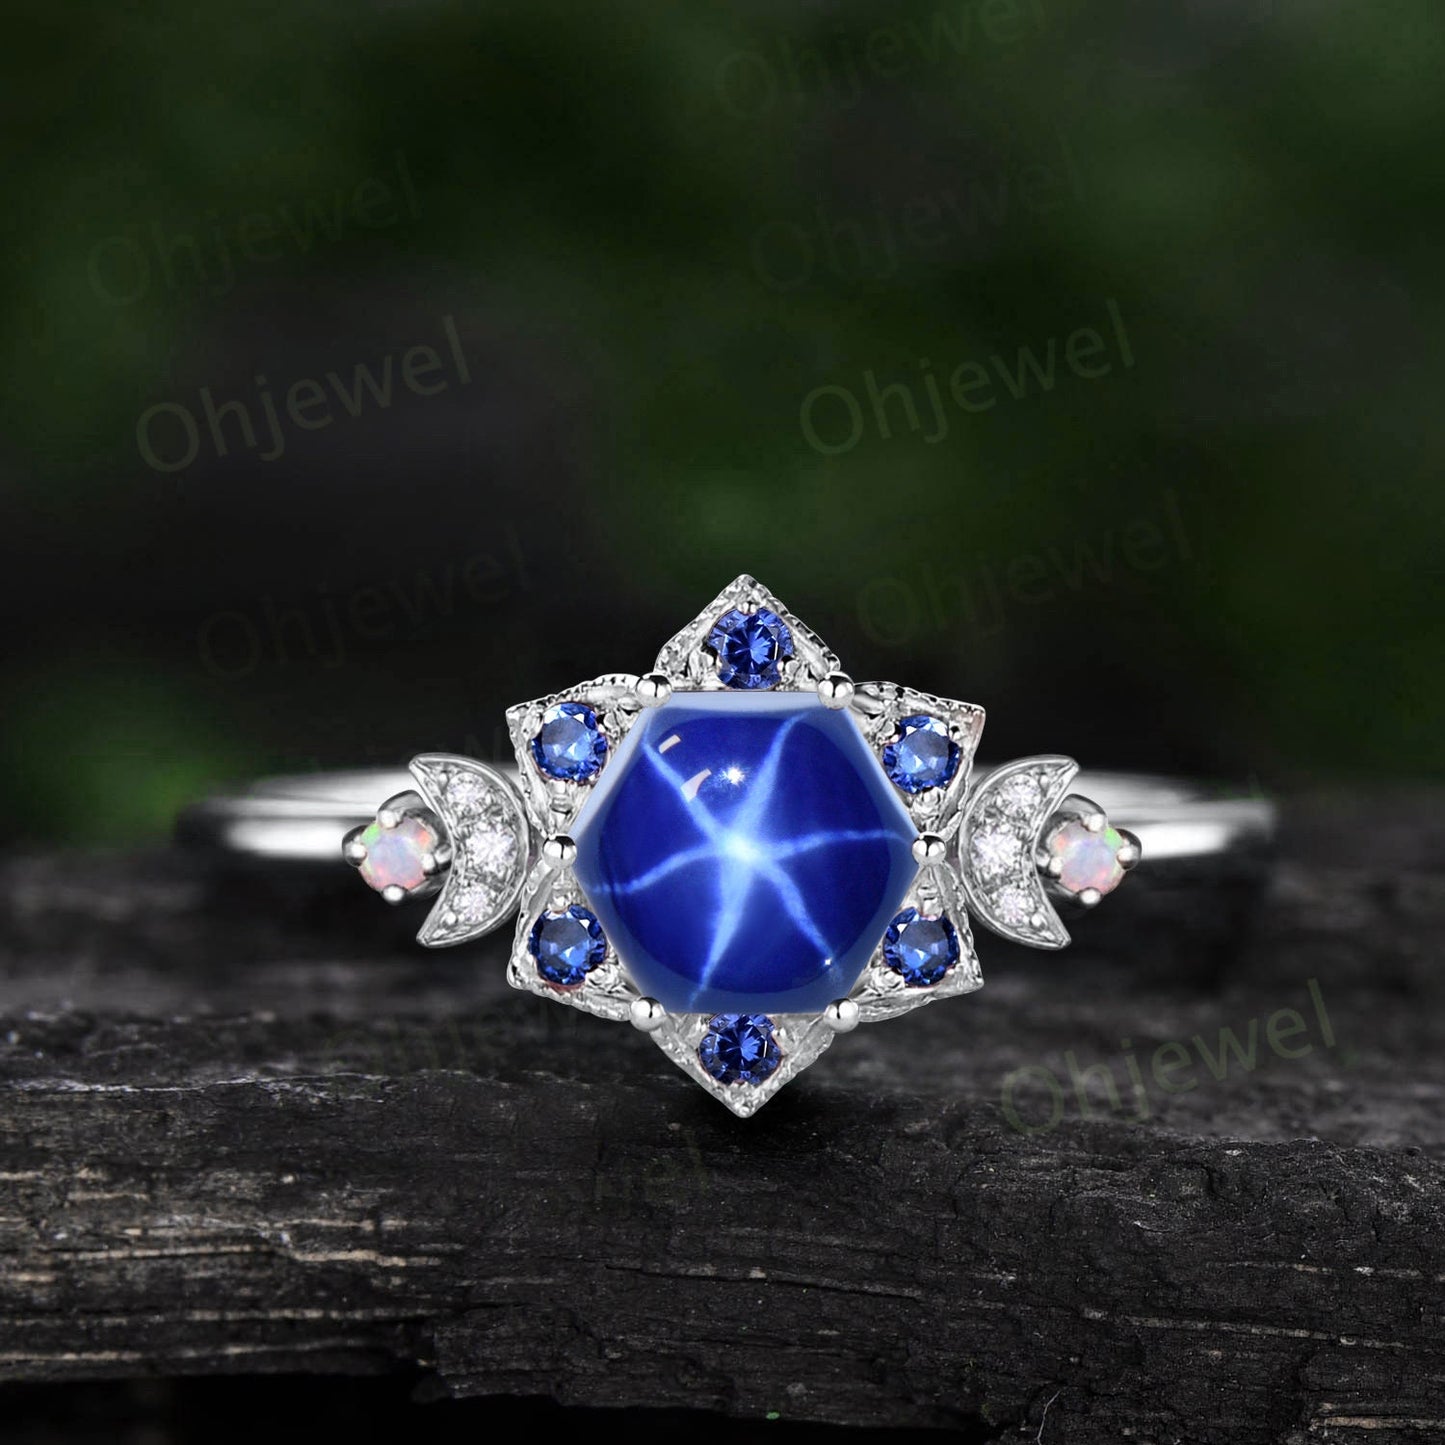 Vintage Hexagon blue star sapphire engagement ring solid 14k yellow gold milgrain floral moon opal diamond ring women wedding ring gift